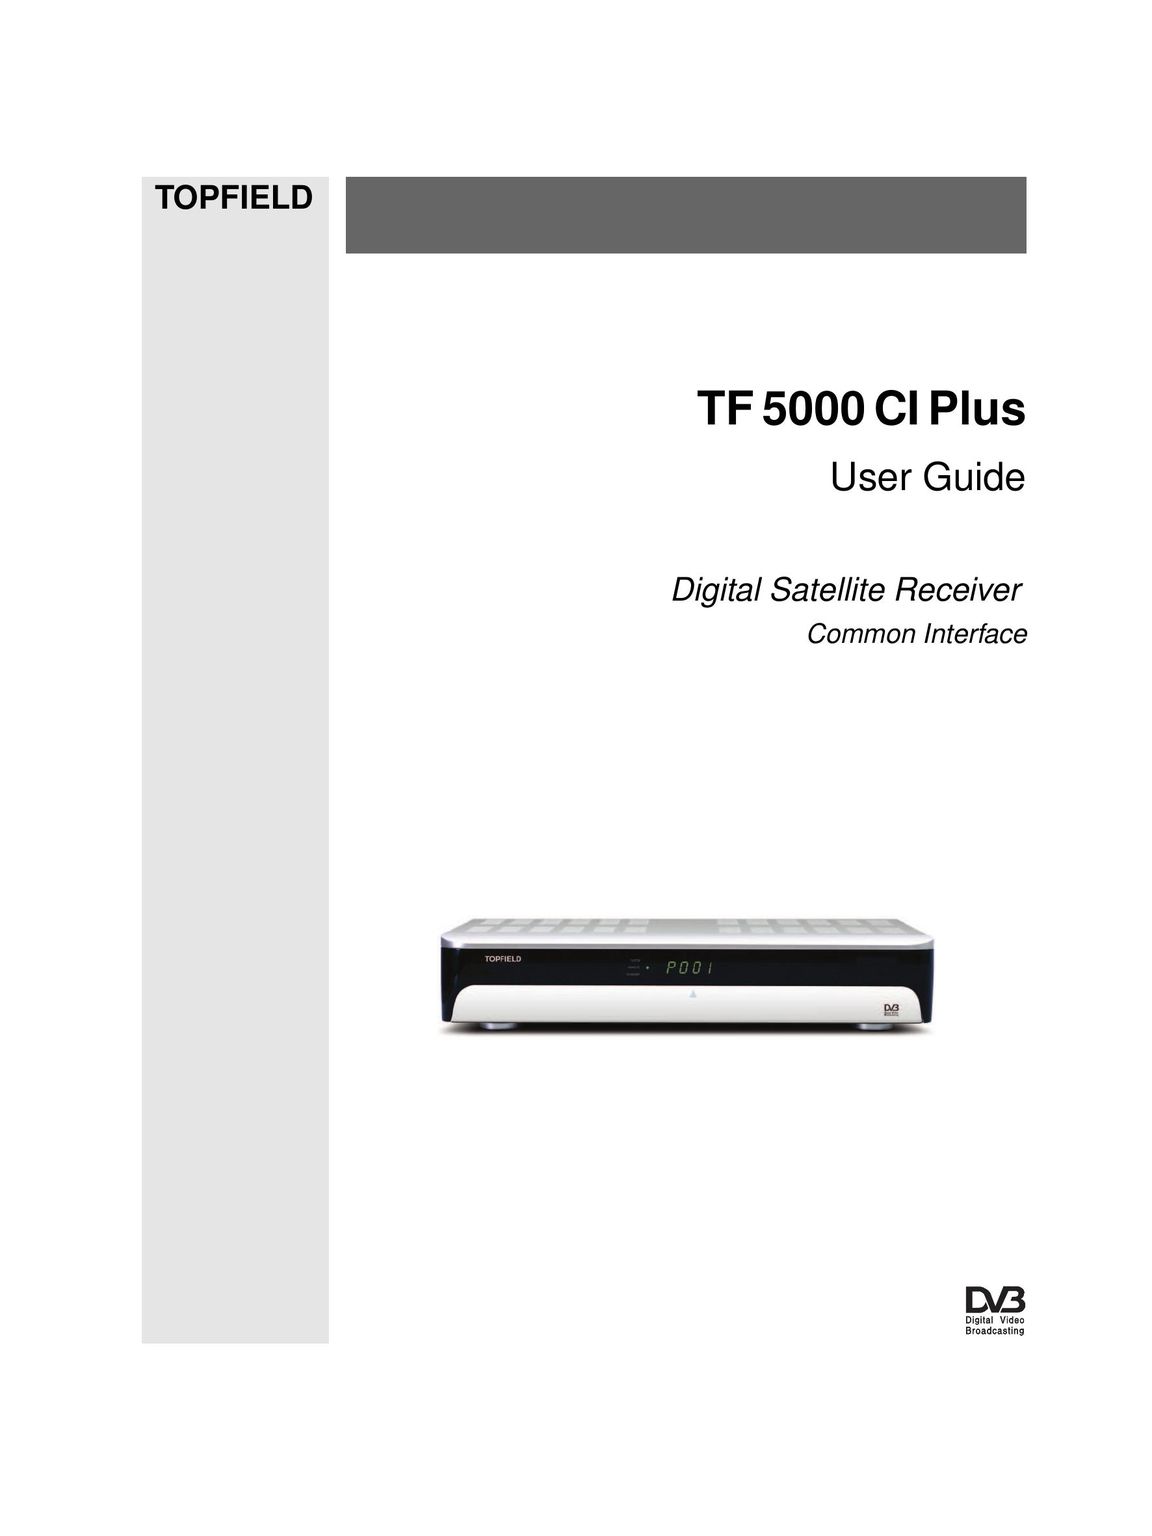 Topfield Topfield Digital Satellite Receiver Satellite TV System User Manual